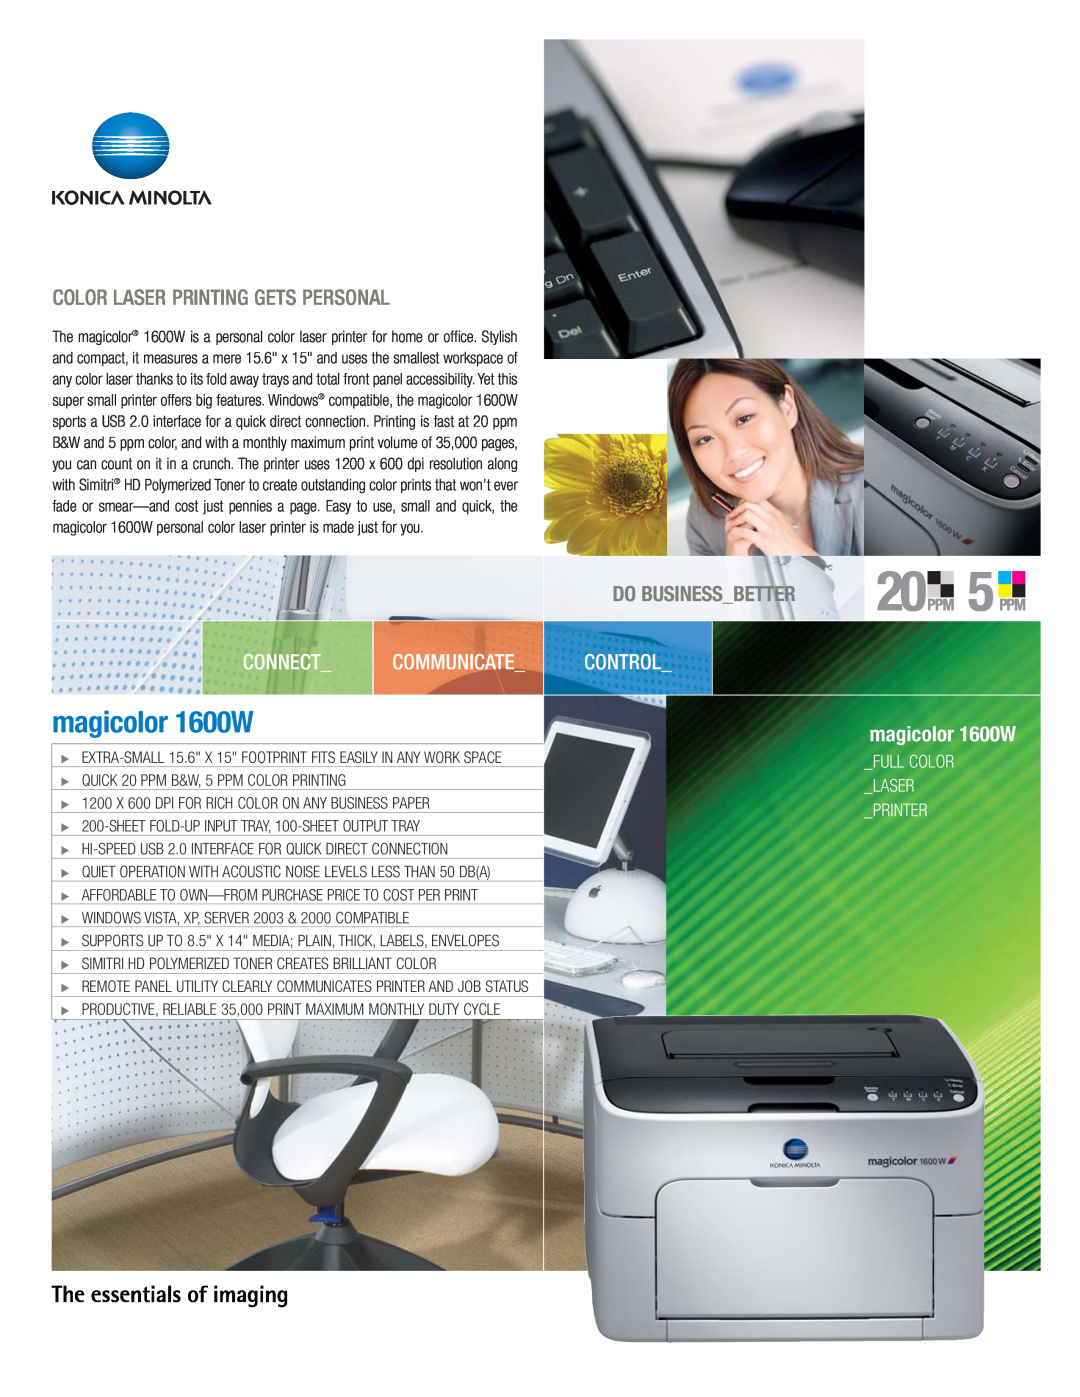 Konica Minolta manual Connect, Control, magicolor 1600W, Color Laser Printing Gets Personal, Communicate, Printer 